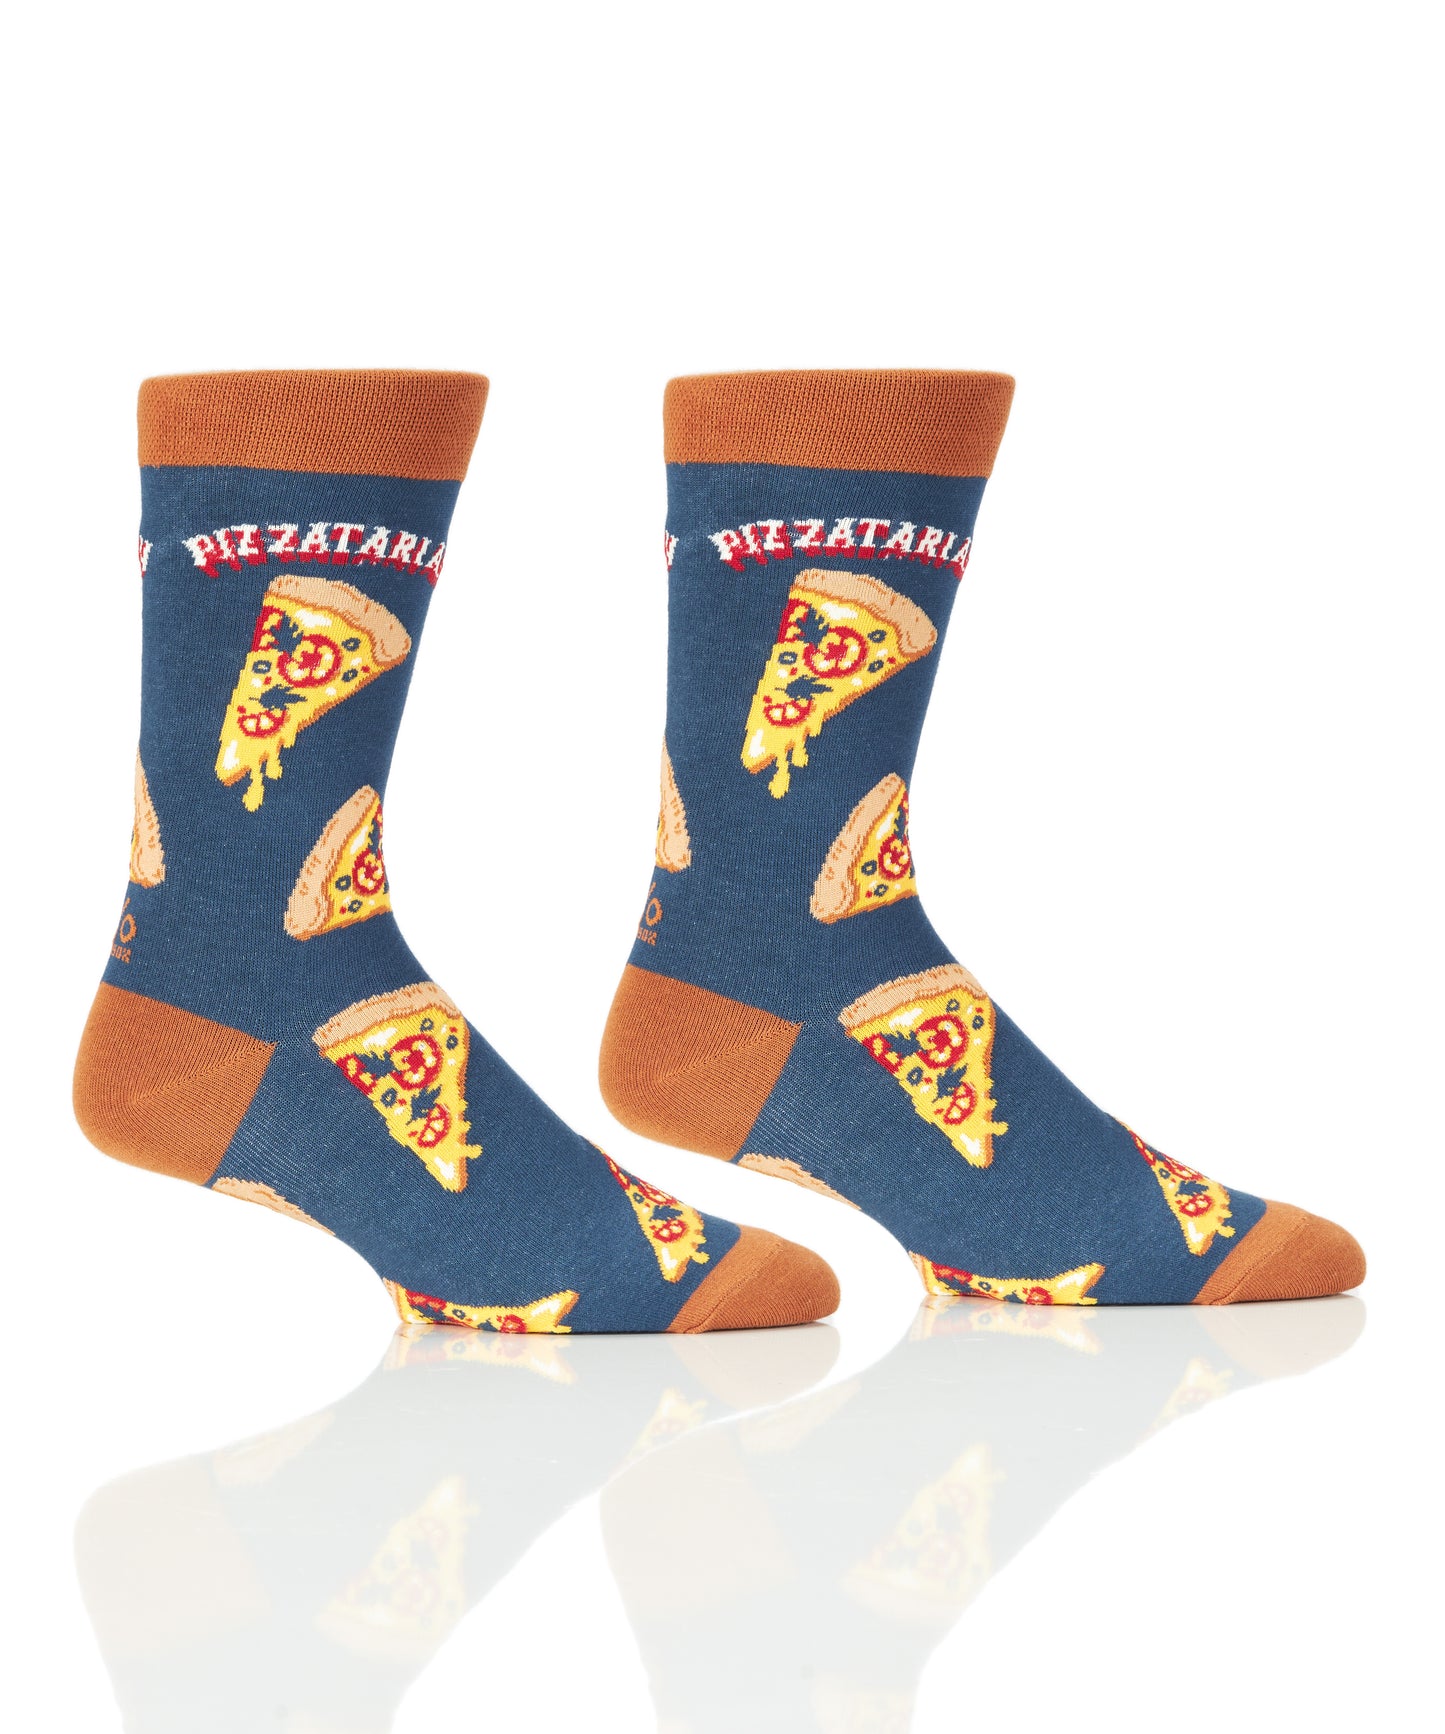 Men's Crew Socks - Pizzatarian